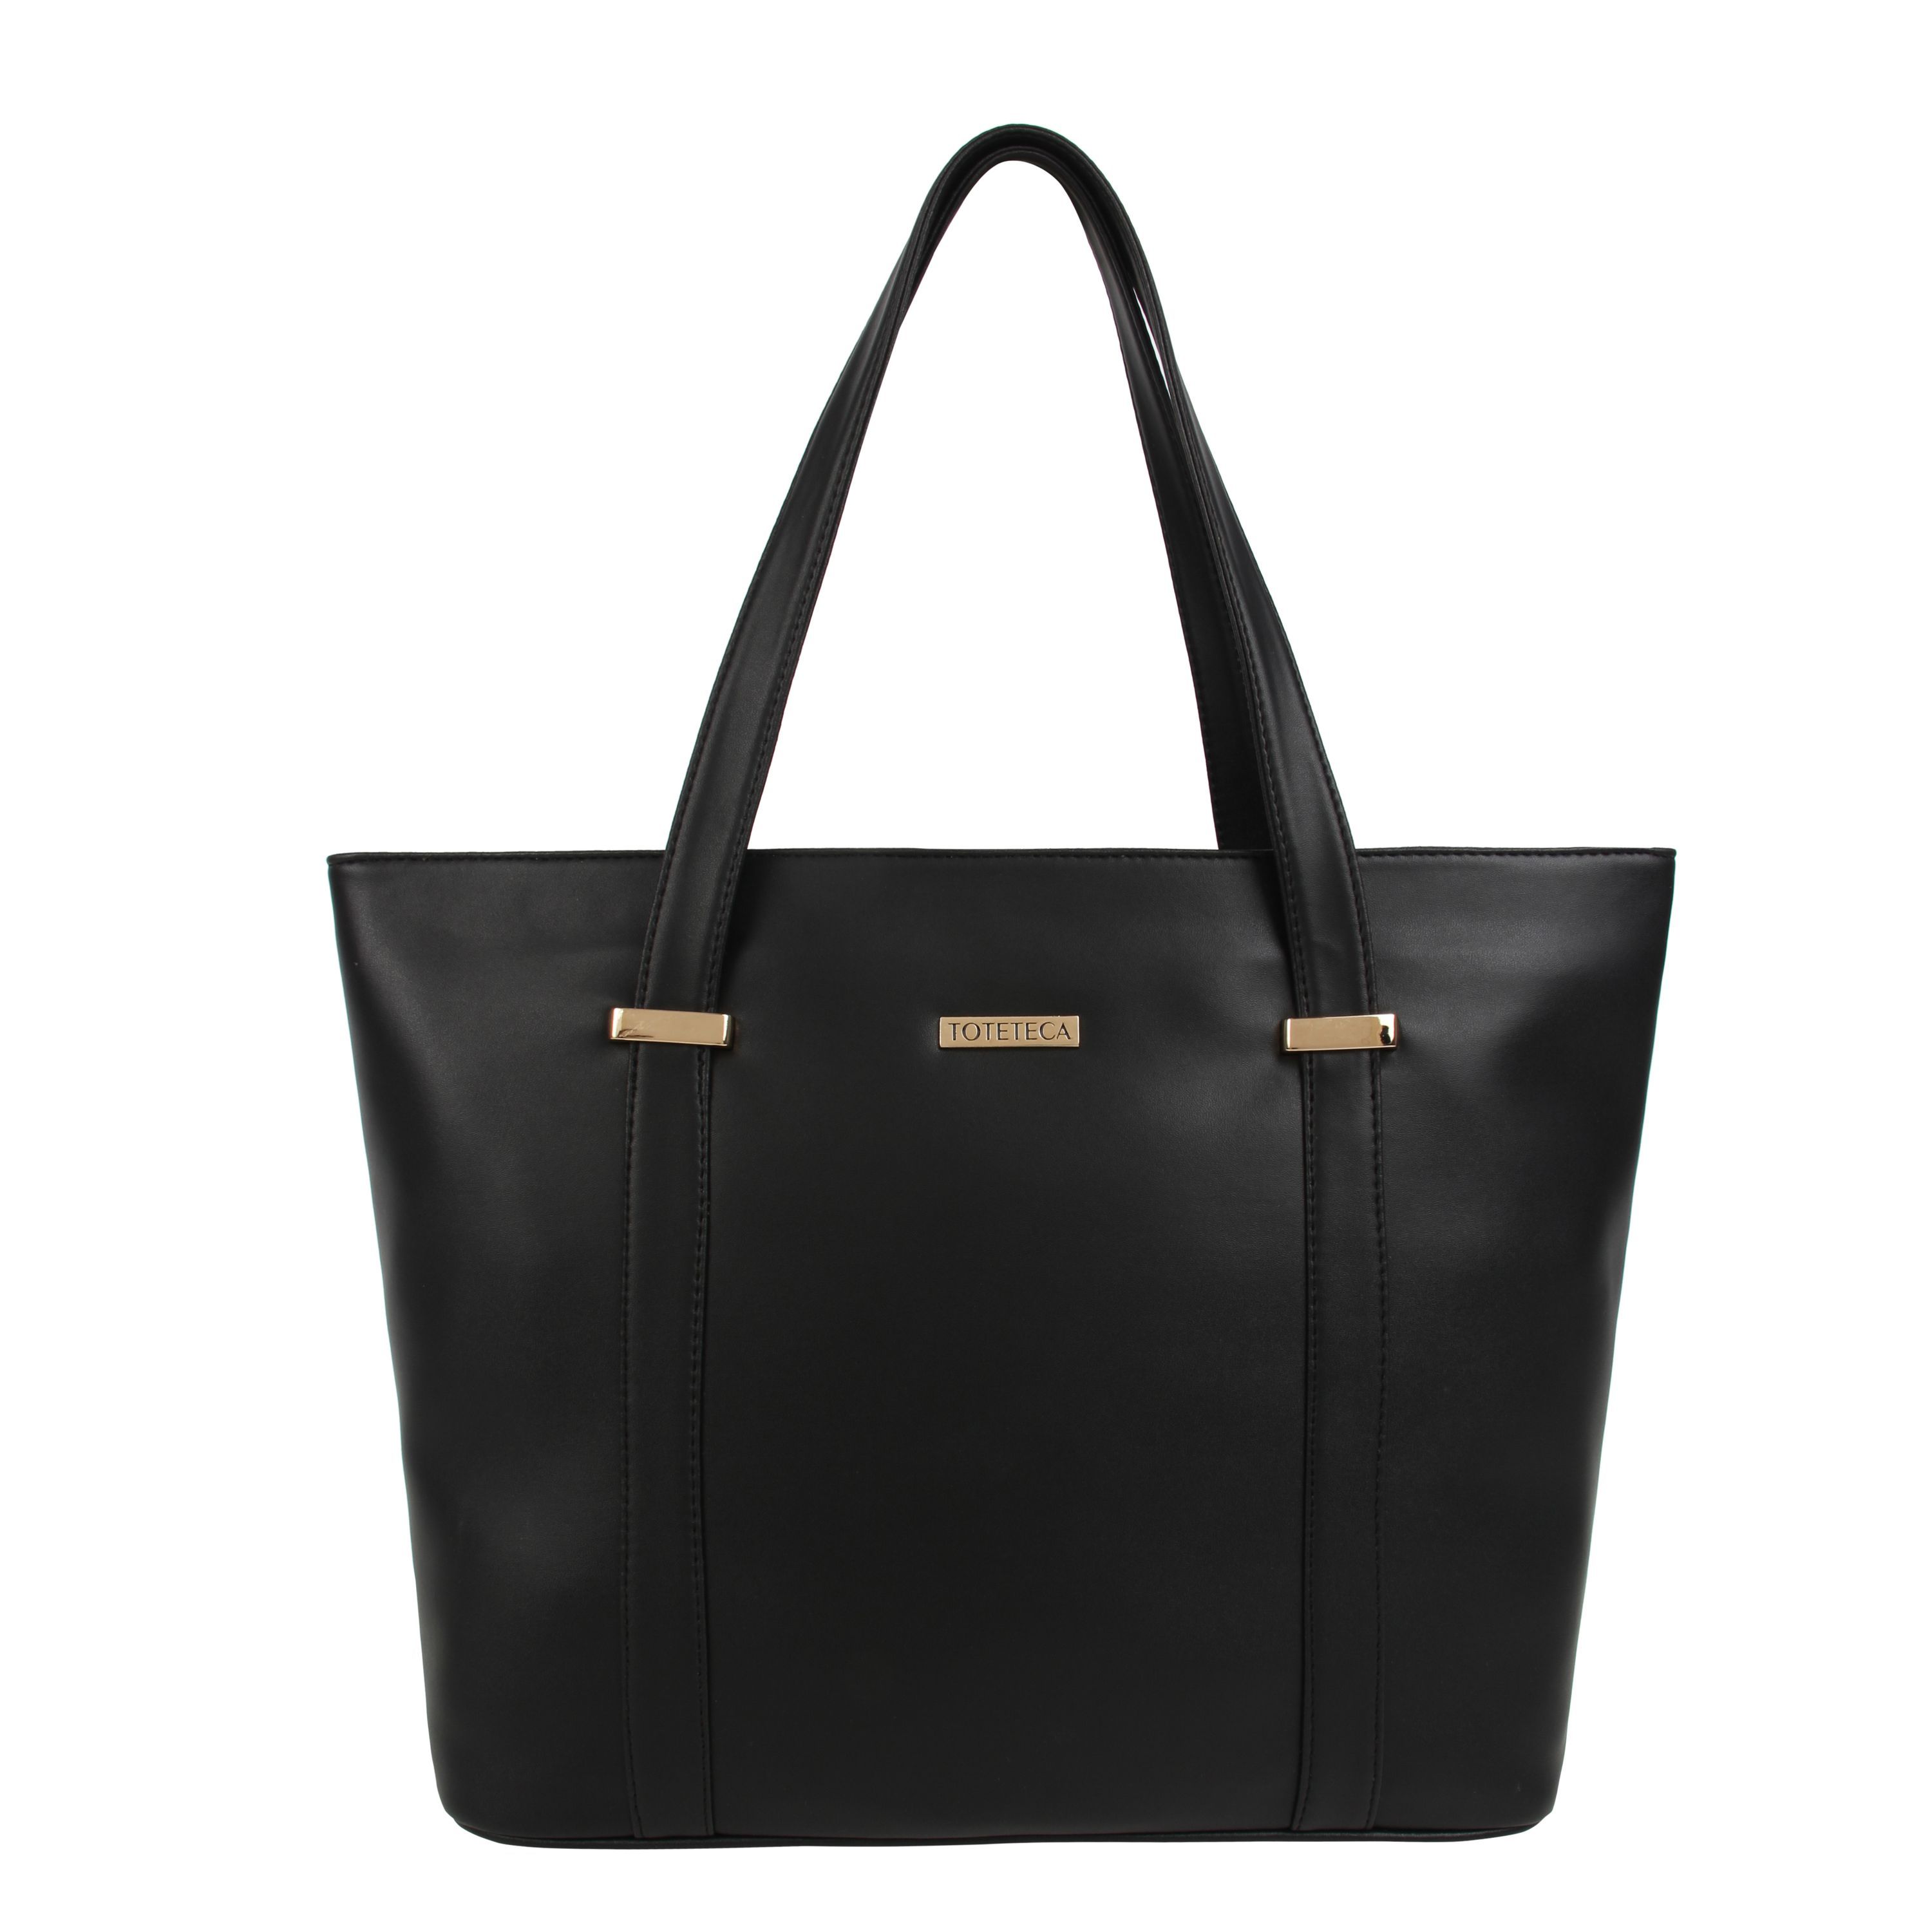 Toteteca Office Shoulder Bag - Black: Buy Toteteca Office Shoulder Bag ...